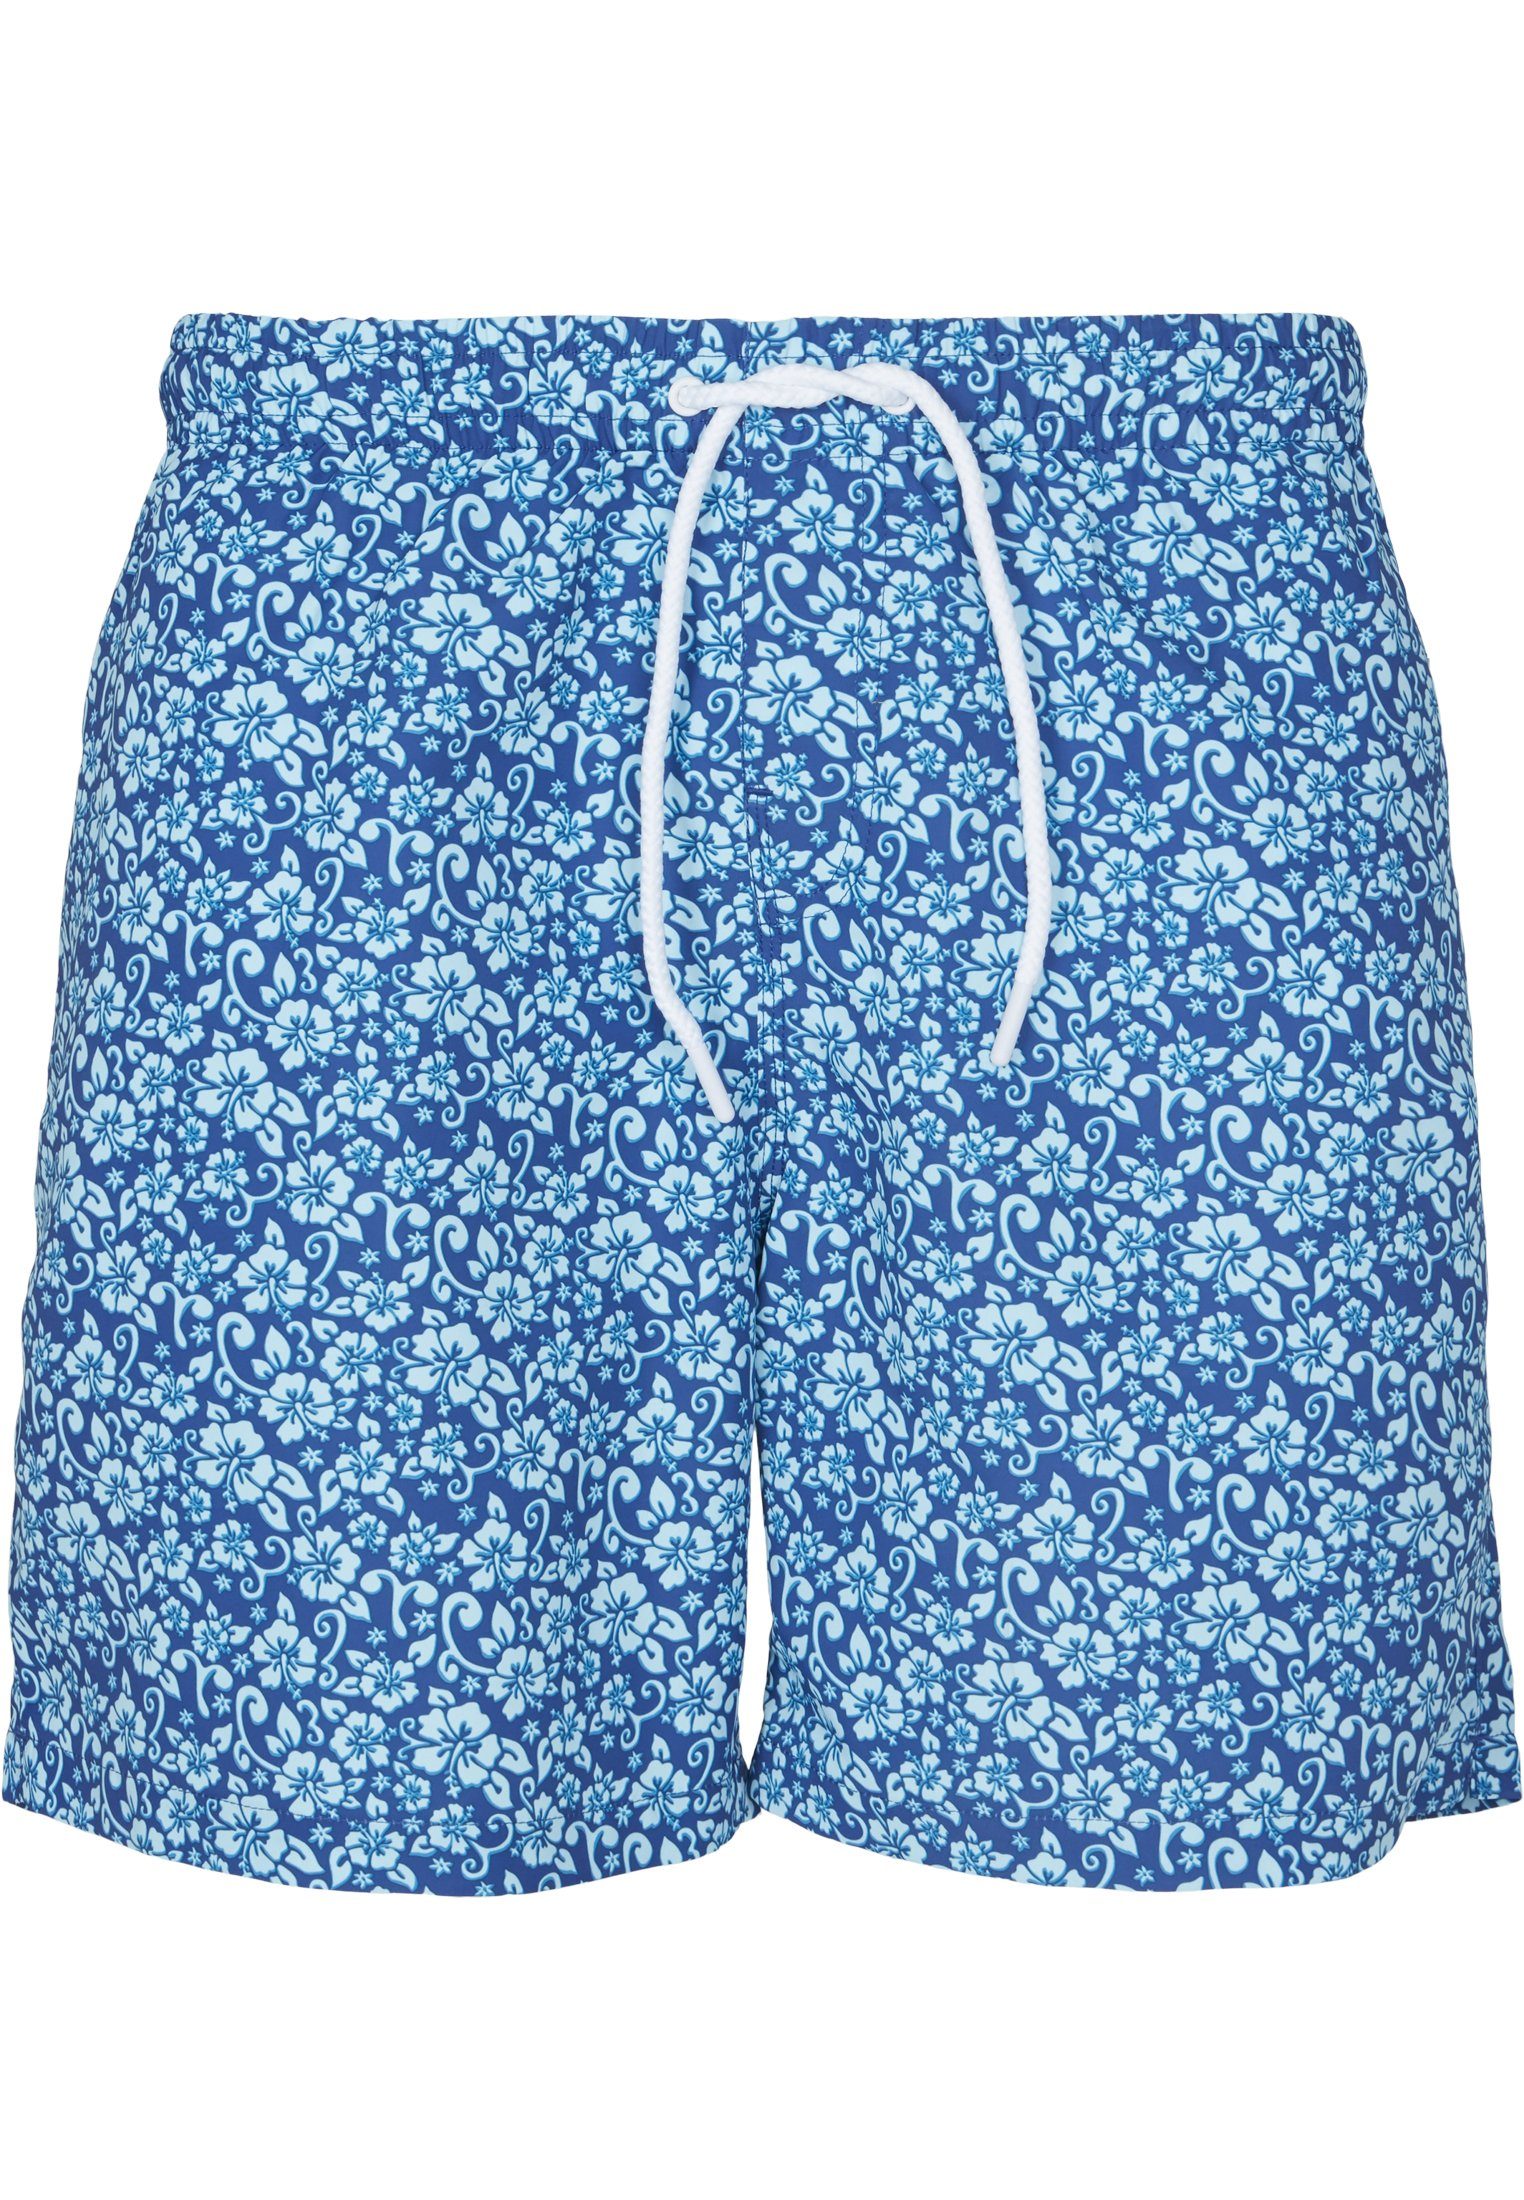 URBAN CLASSICS Badeshorts Herren Floral navy Swim Shorts